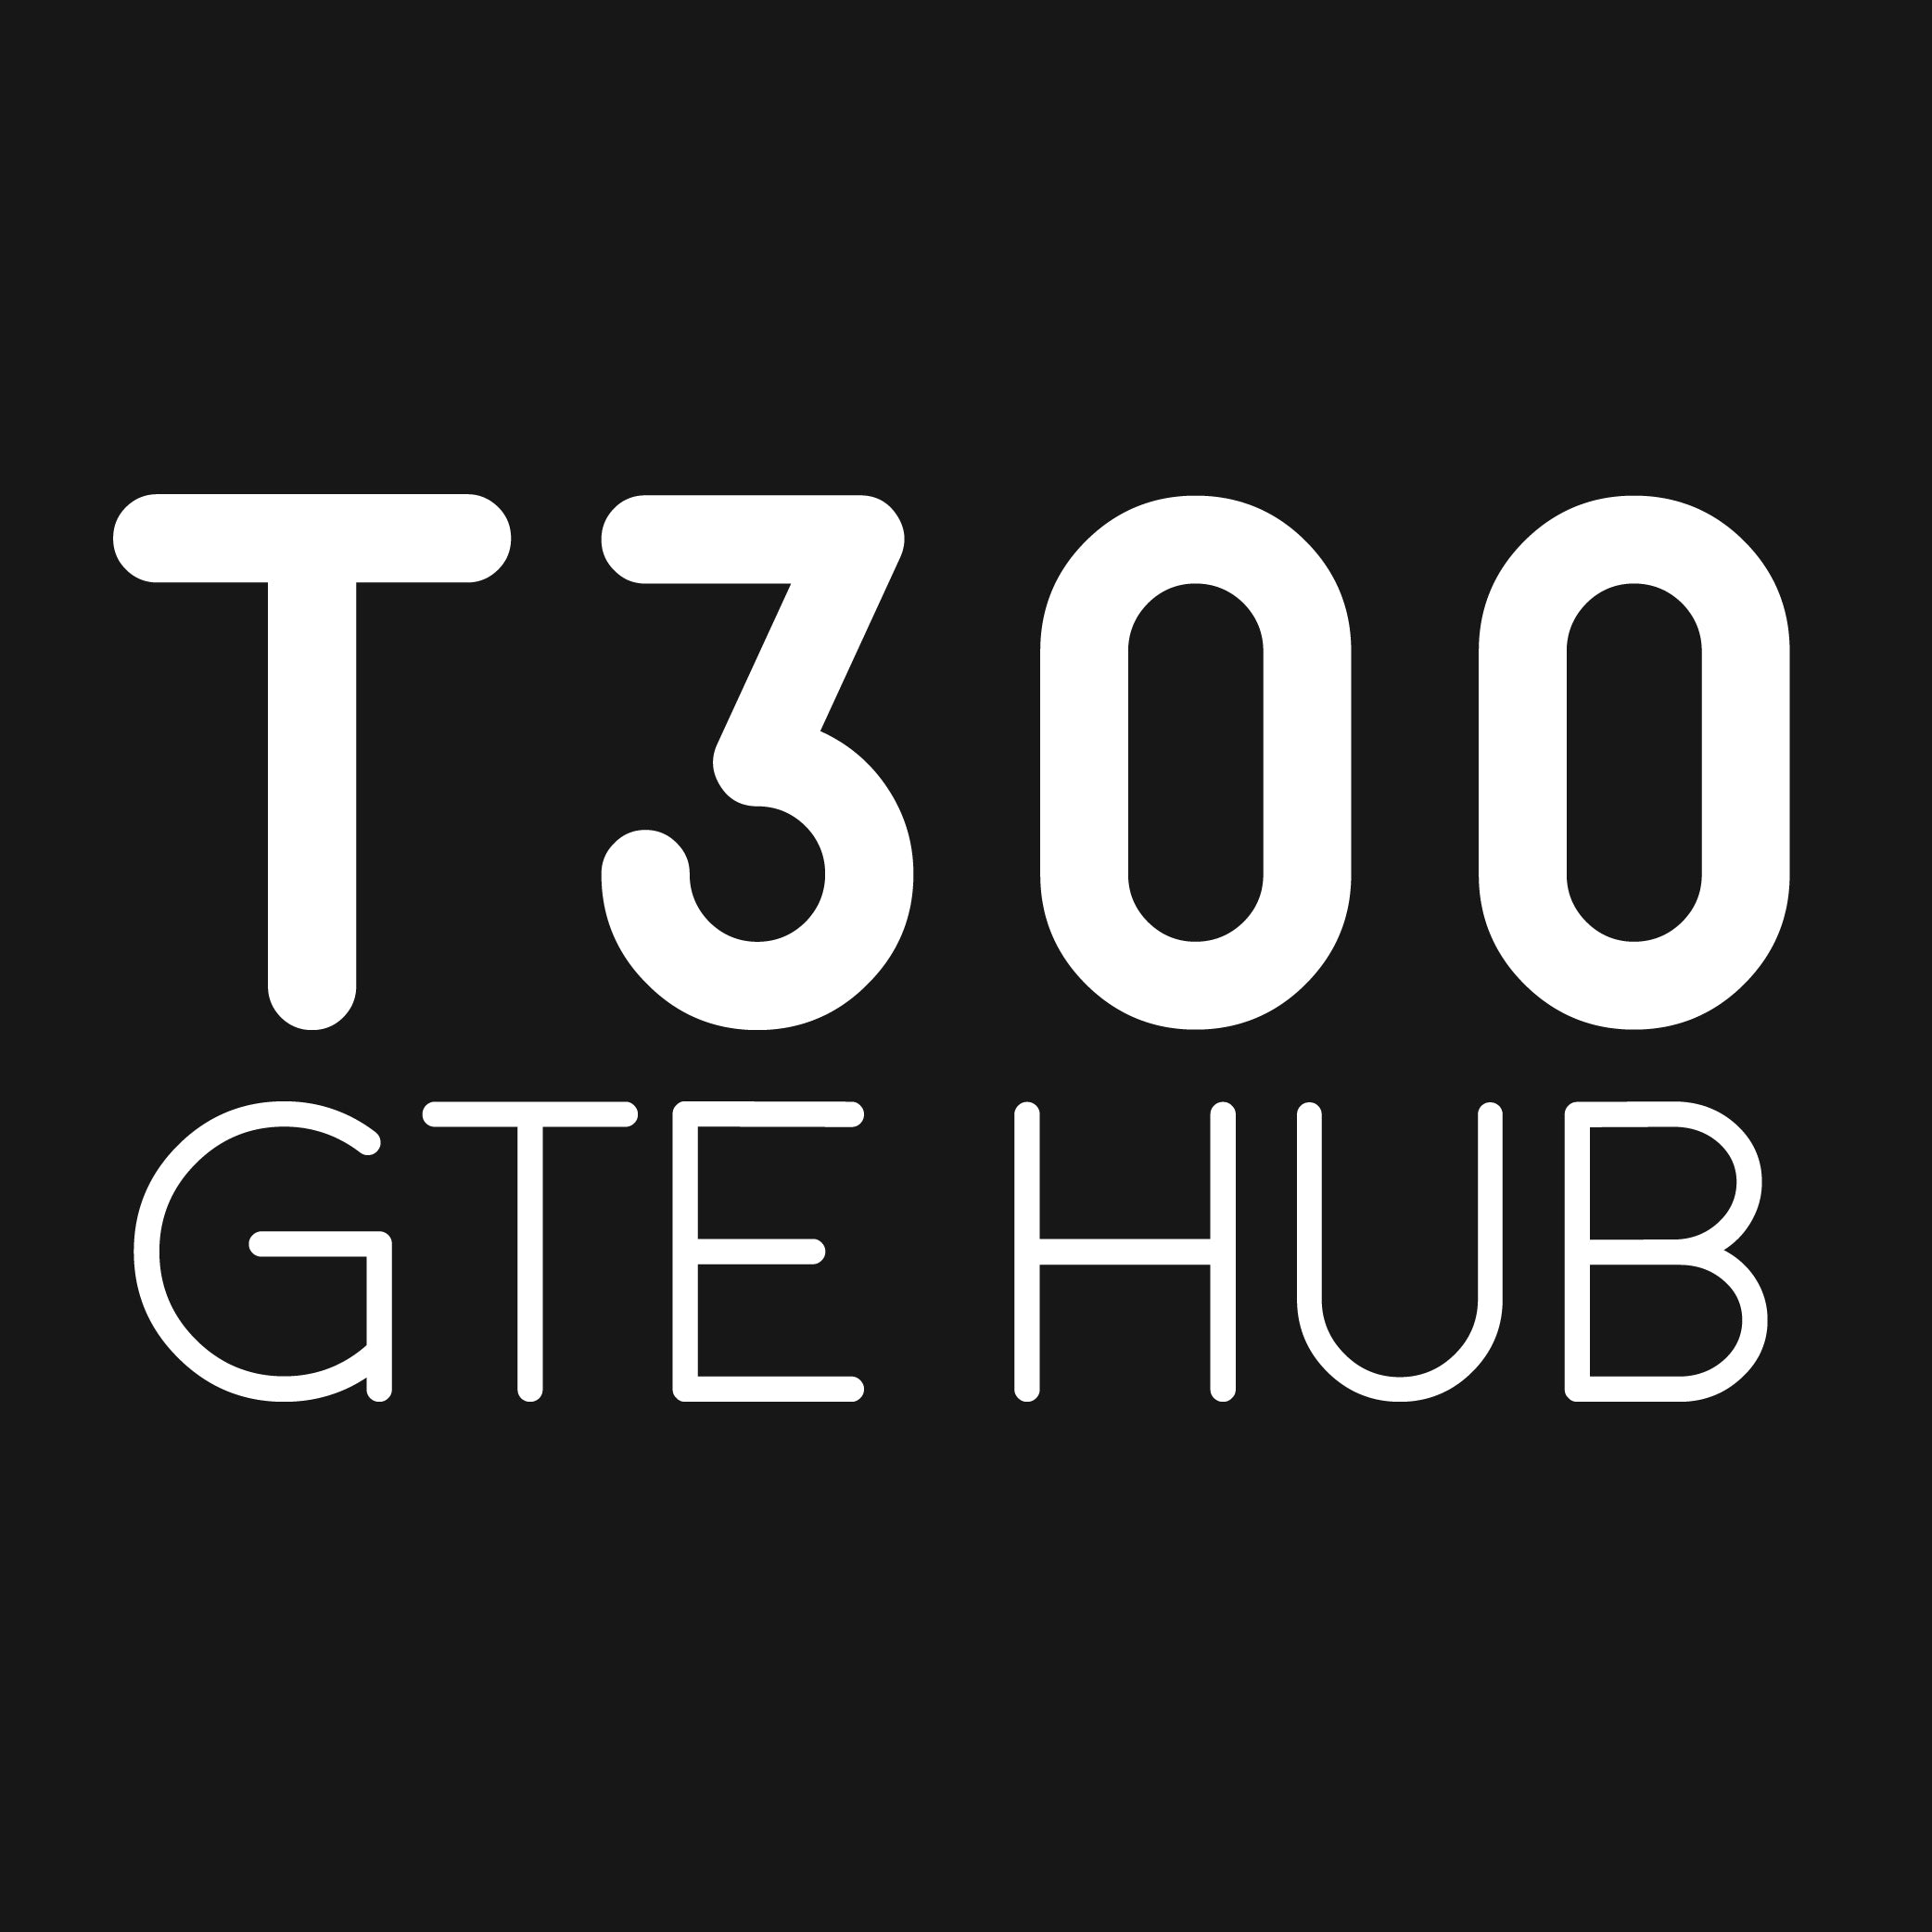 T300 GTE Electronic Hub